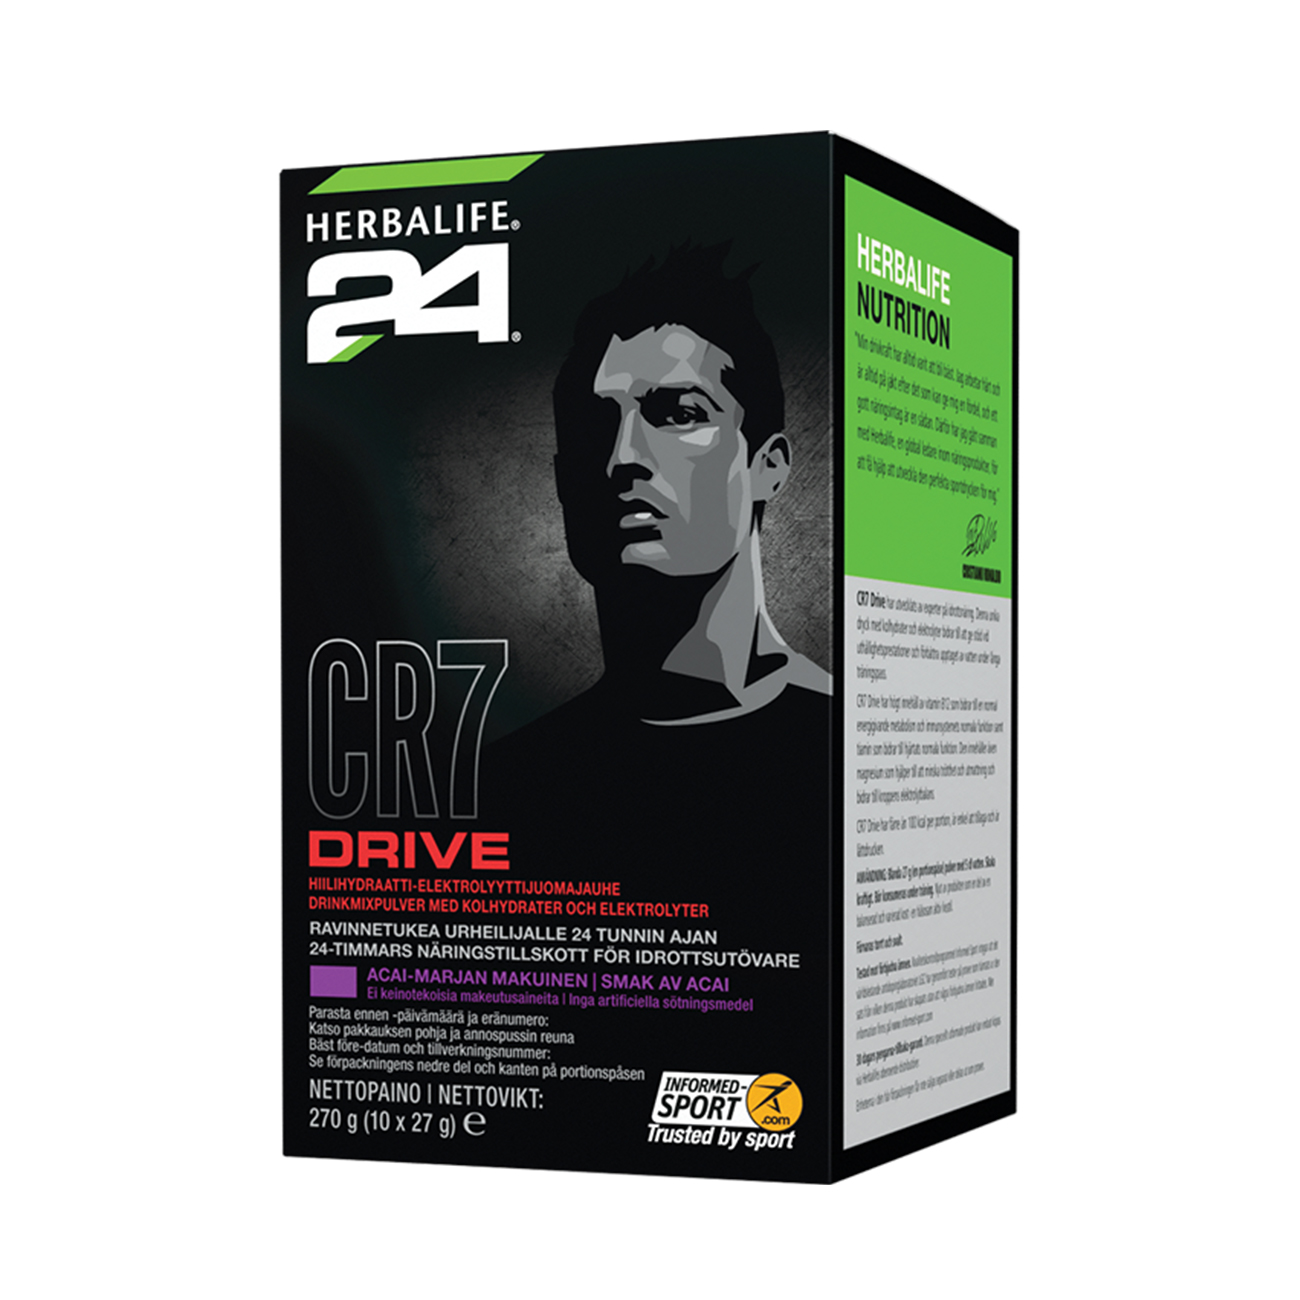 Herbalife24® CR7 Drive Sportdryck Acai Berry produktbild